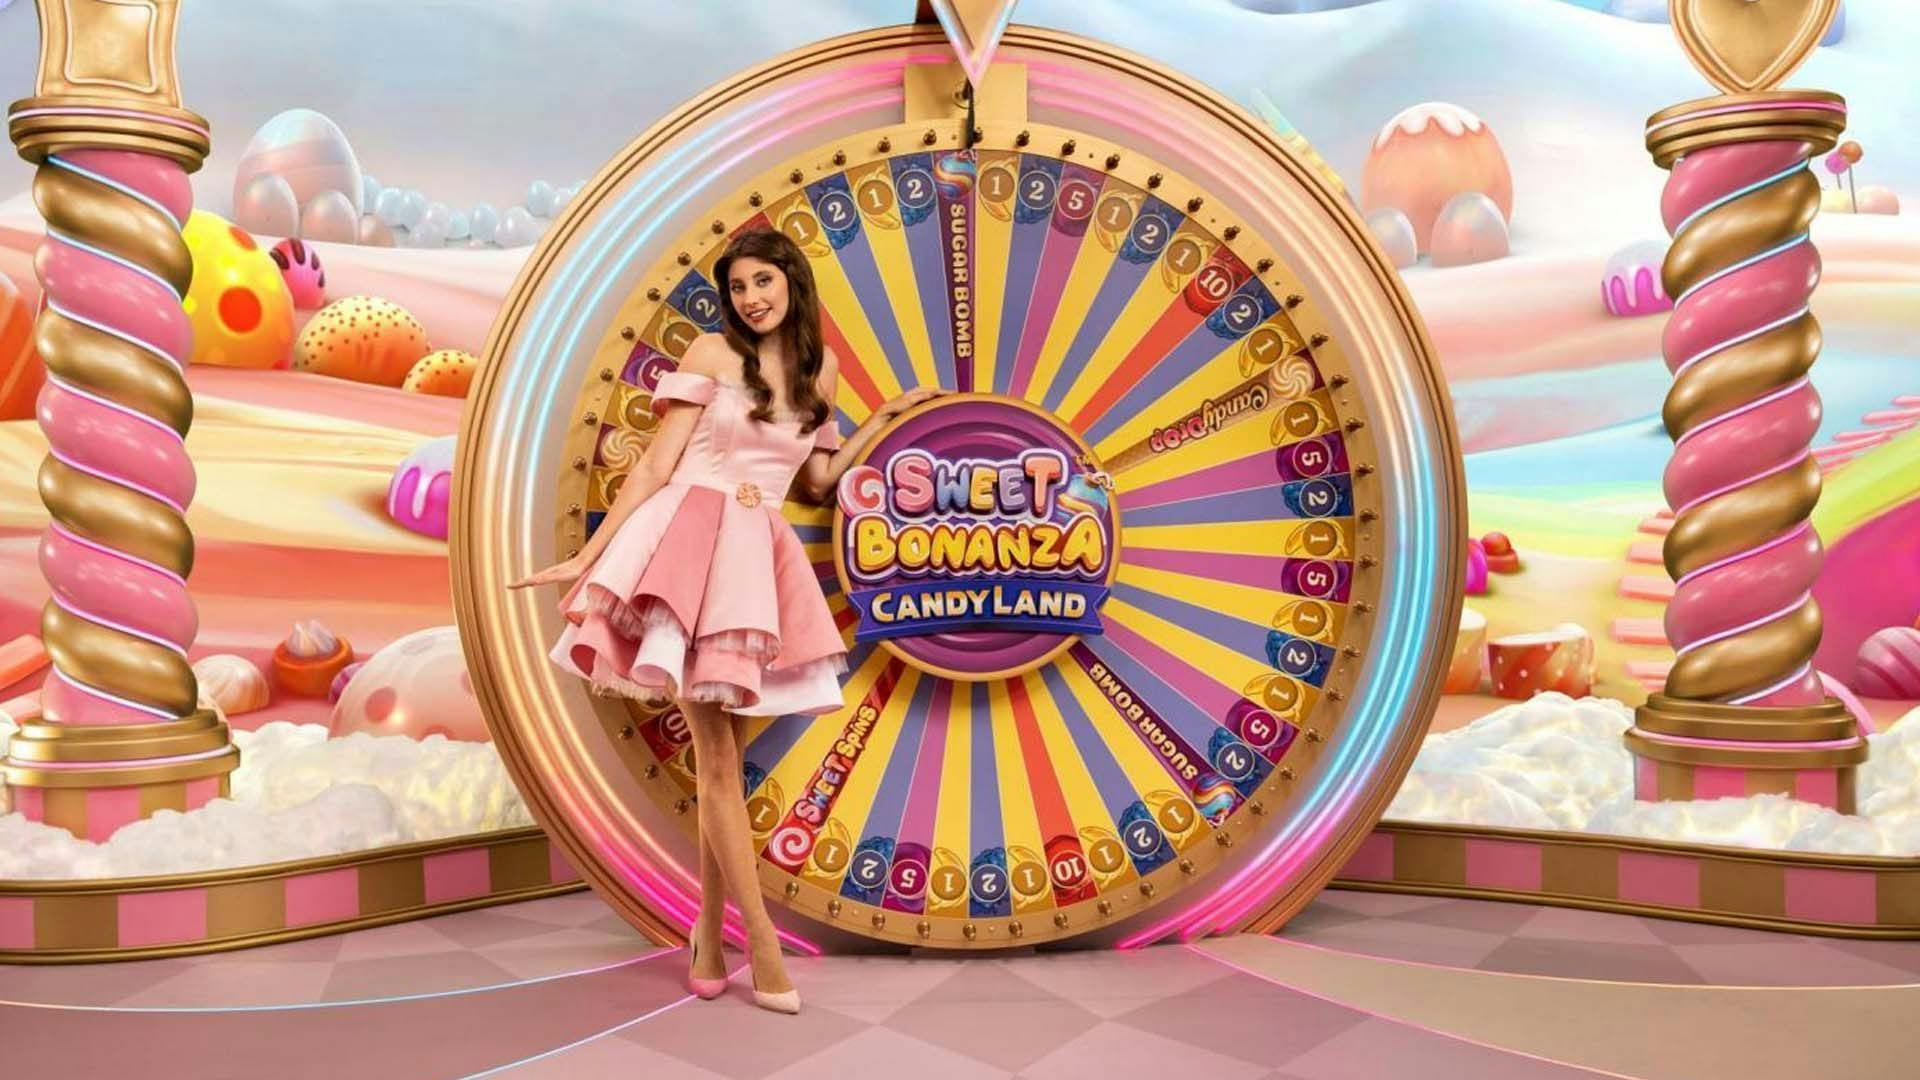 Sweet Bonanza Candyland Live Casino Game